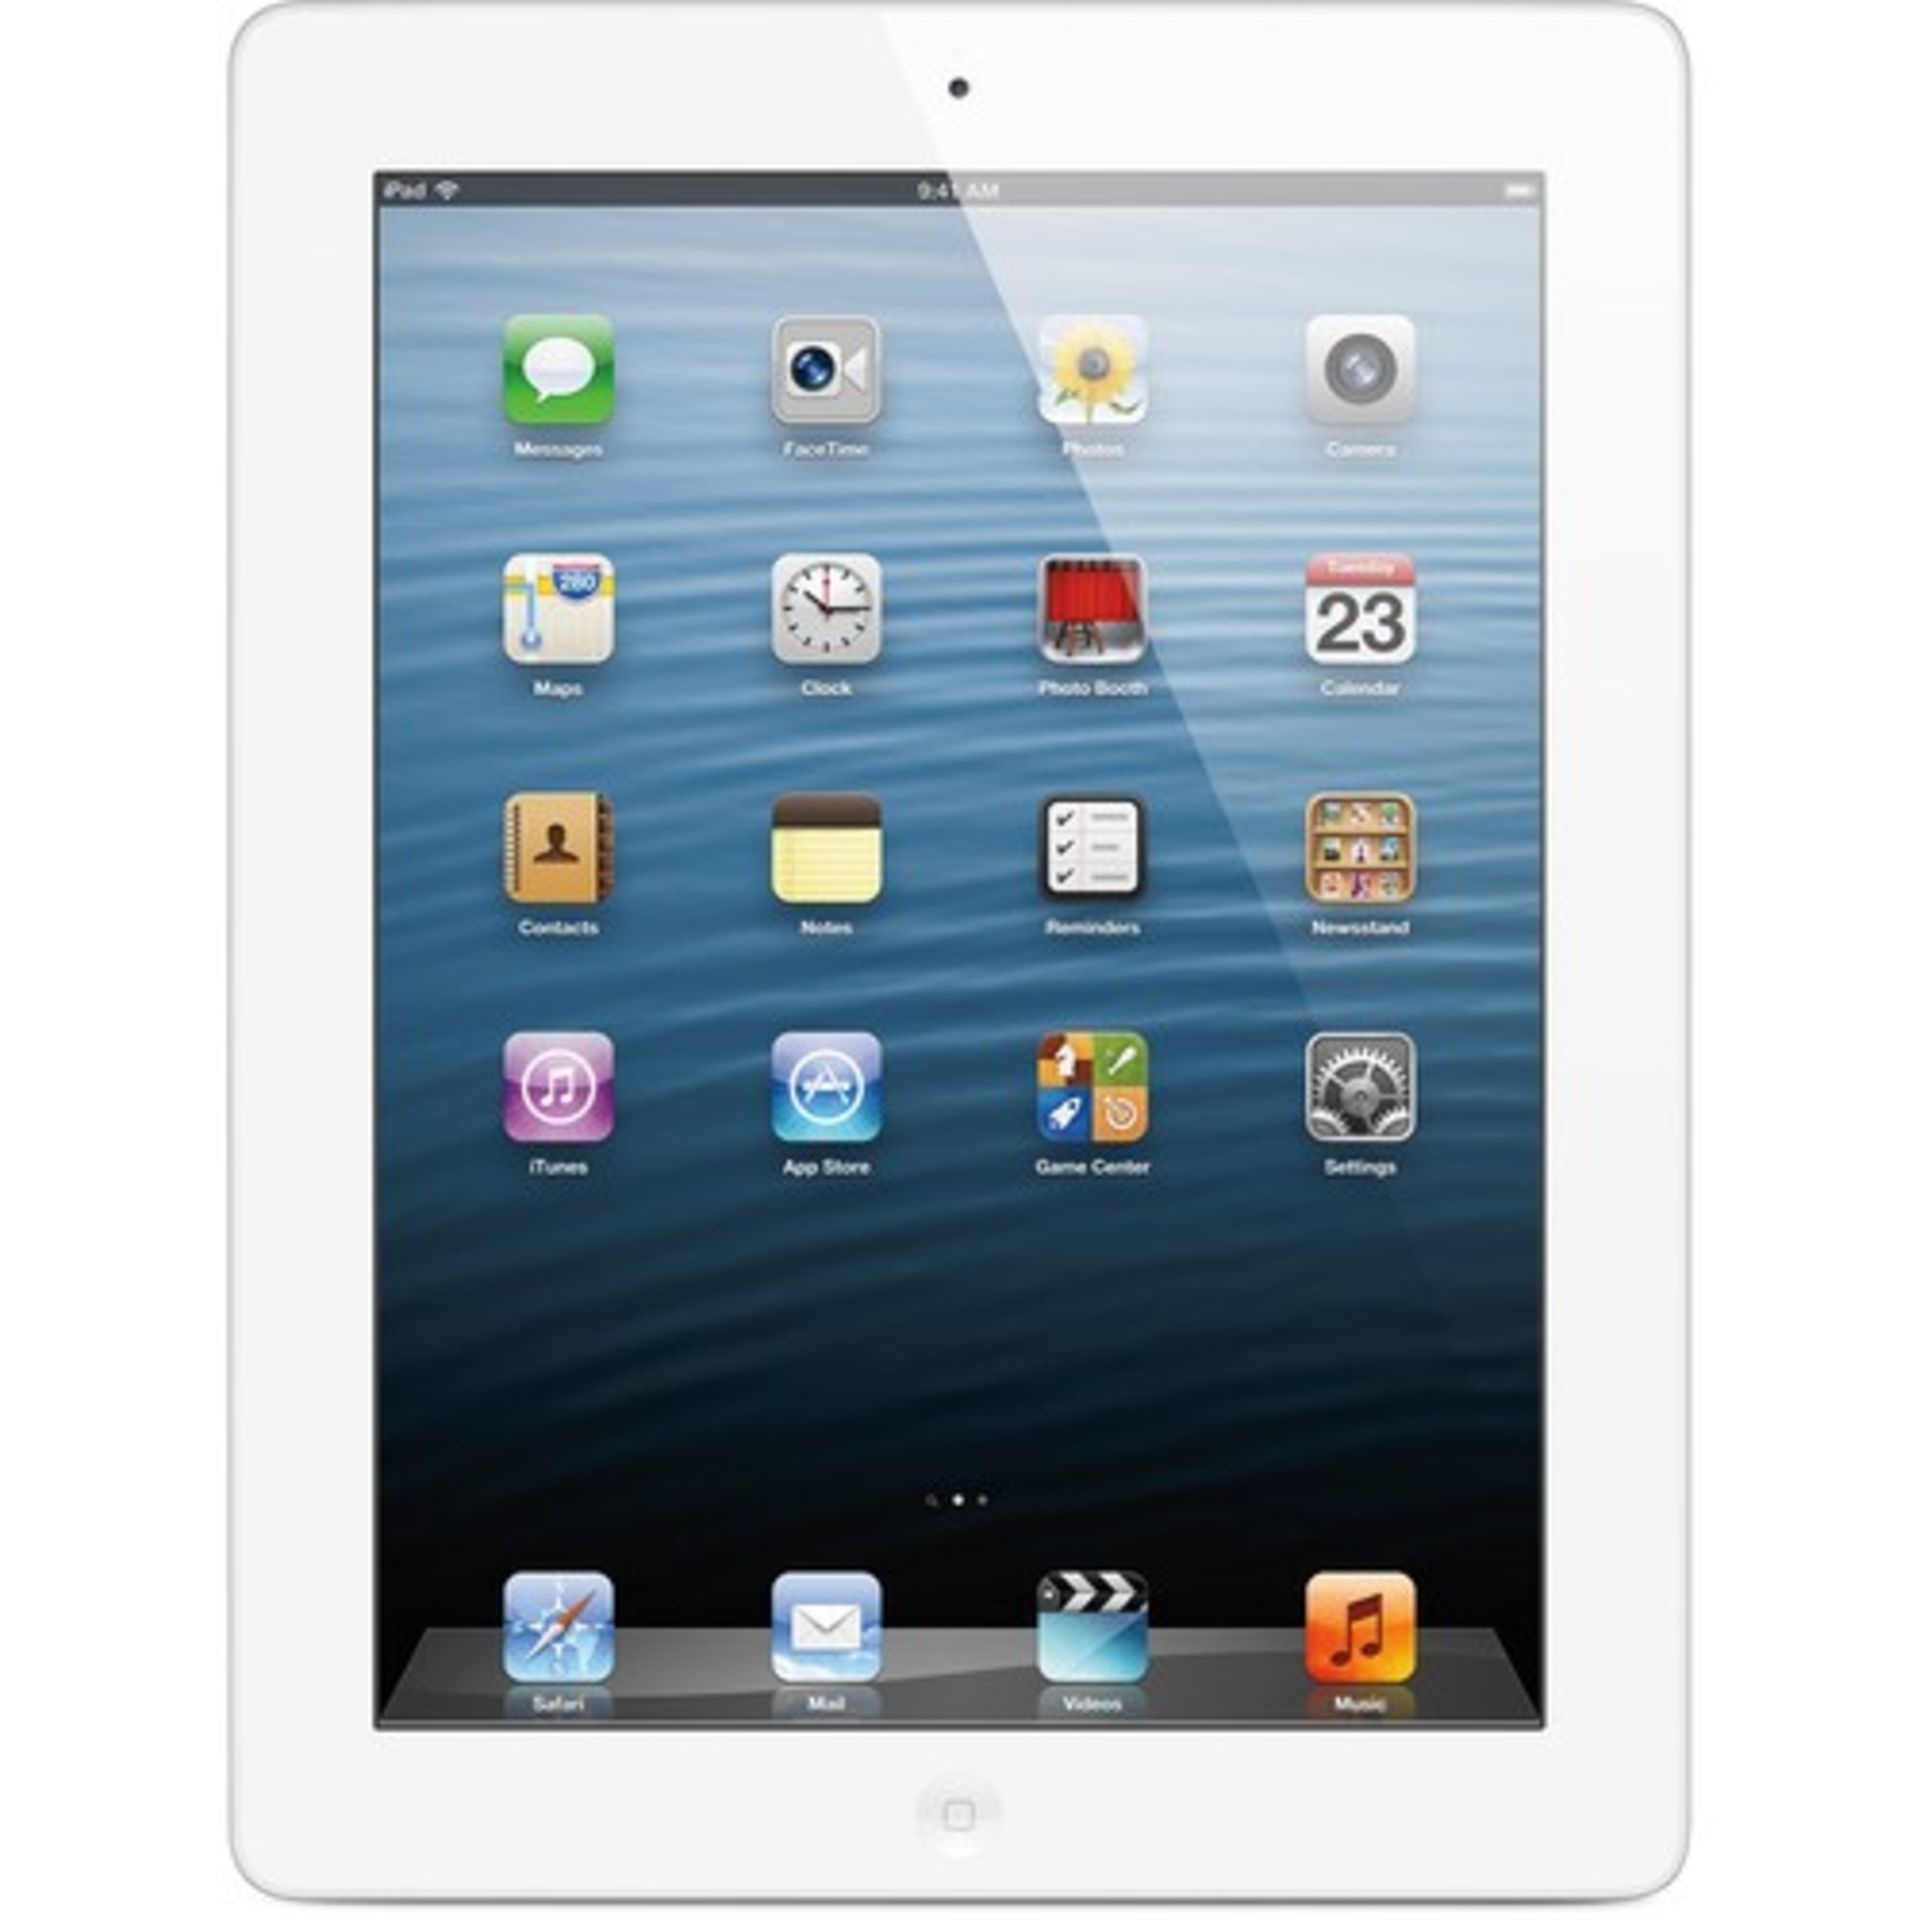 V iPad 4 16Gb White Boxed - Original Box With Two Cameras/Retina Display Etc - Factory Graded